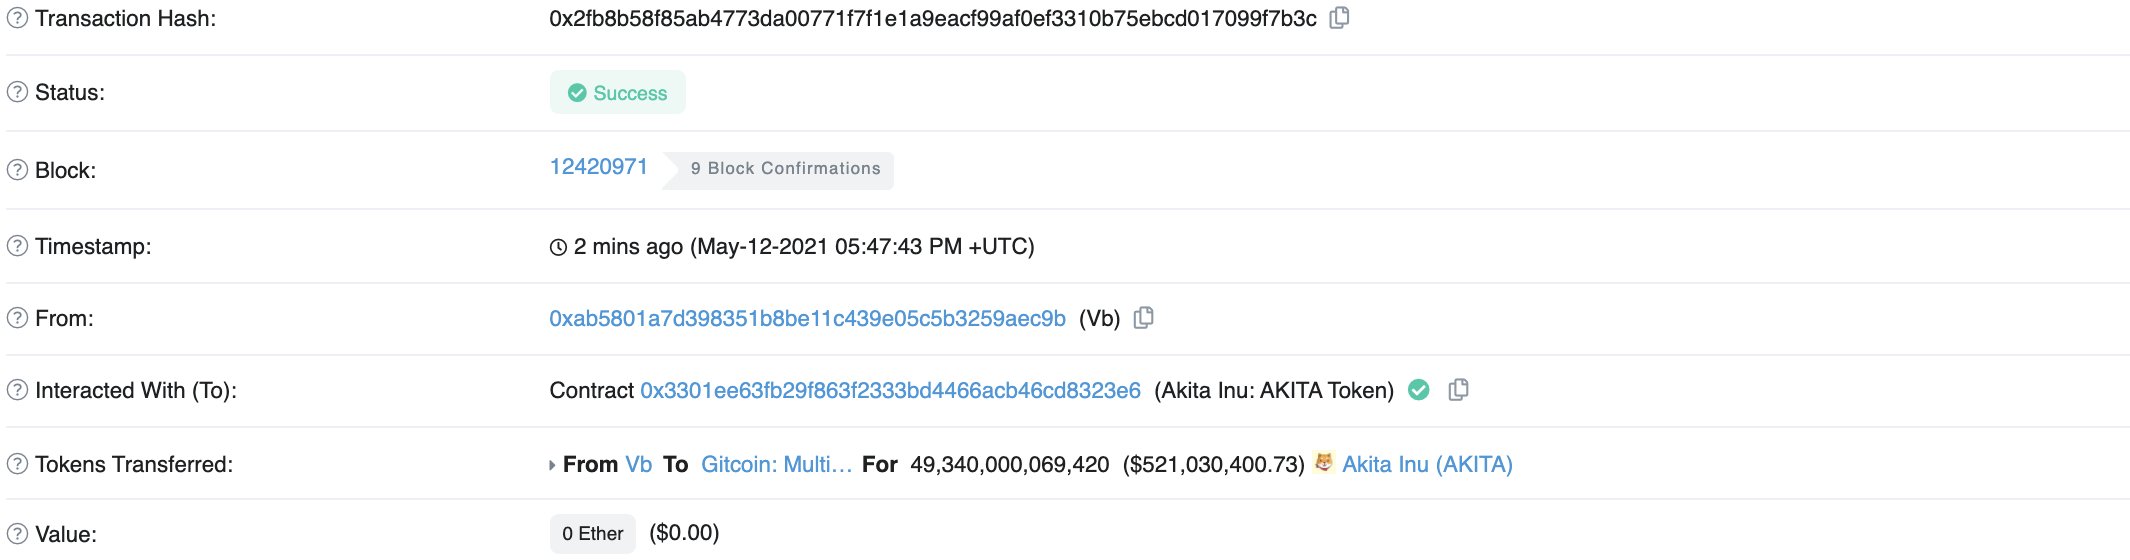 Vitalik Buterin transaction to Gitcoin